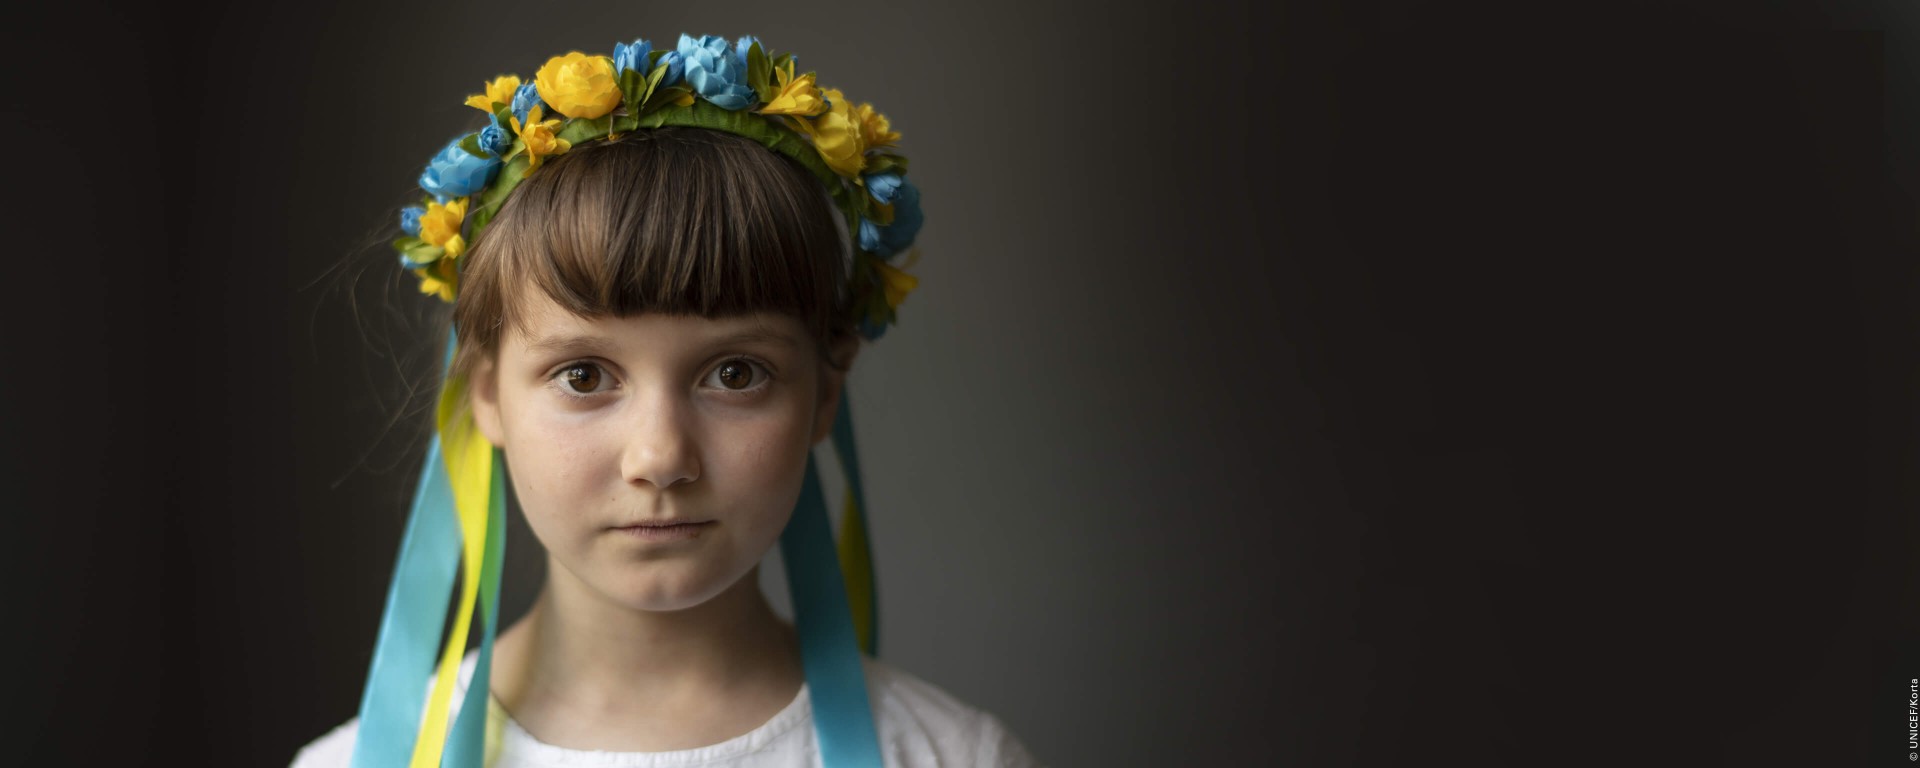 UNICEF Polska - Razem pomagamy dzieciom z Ukrainy